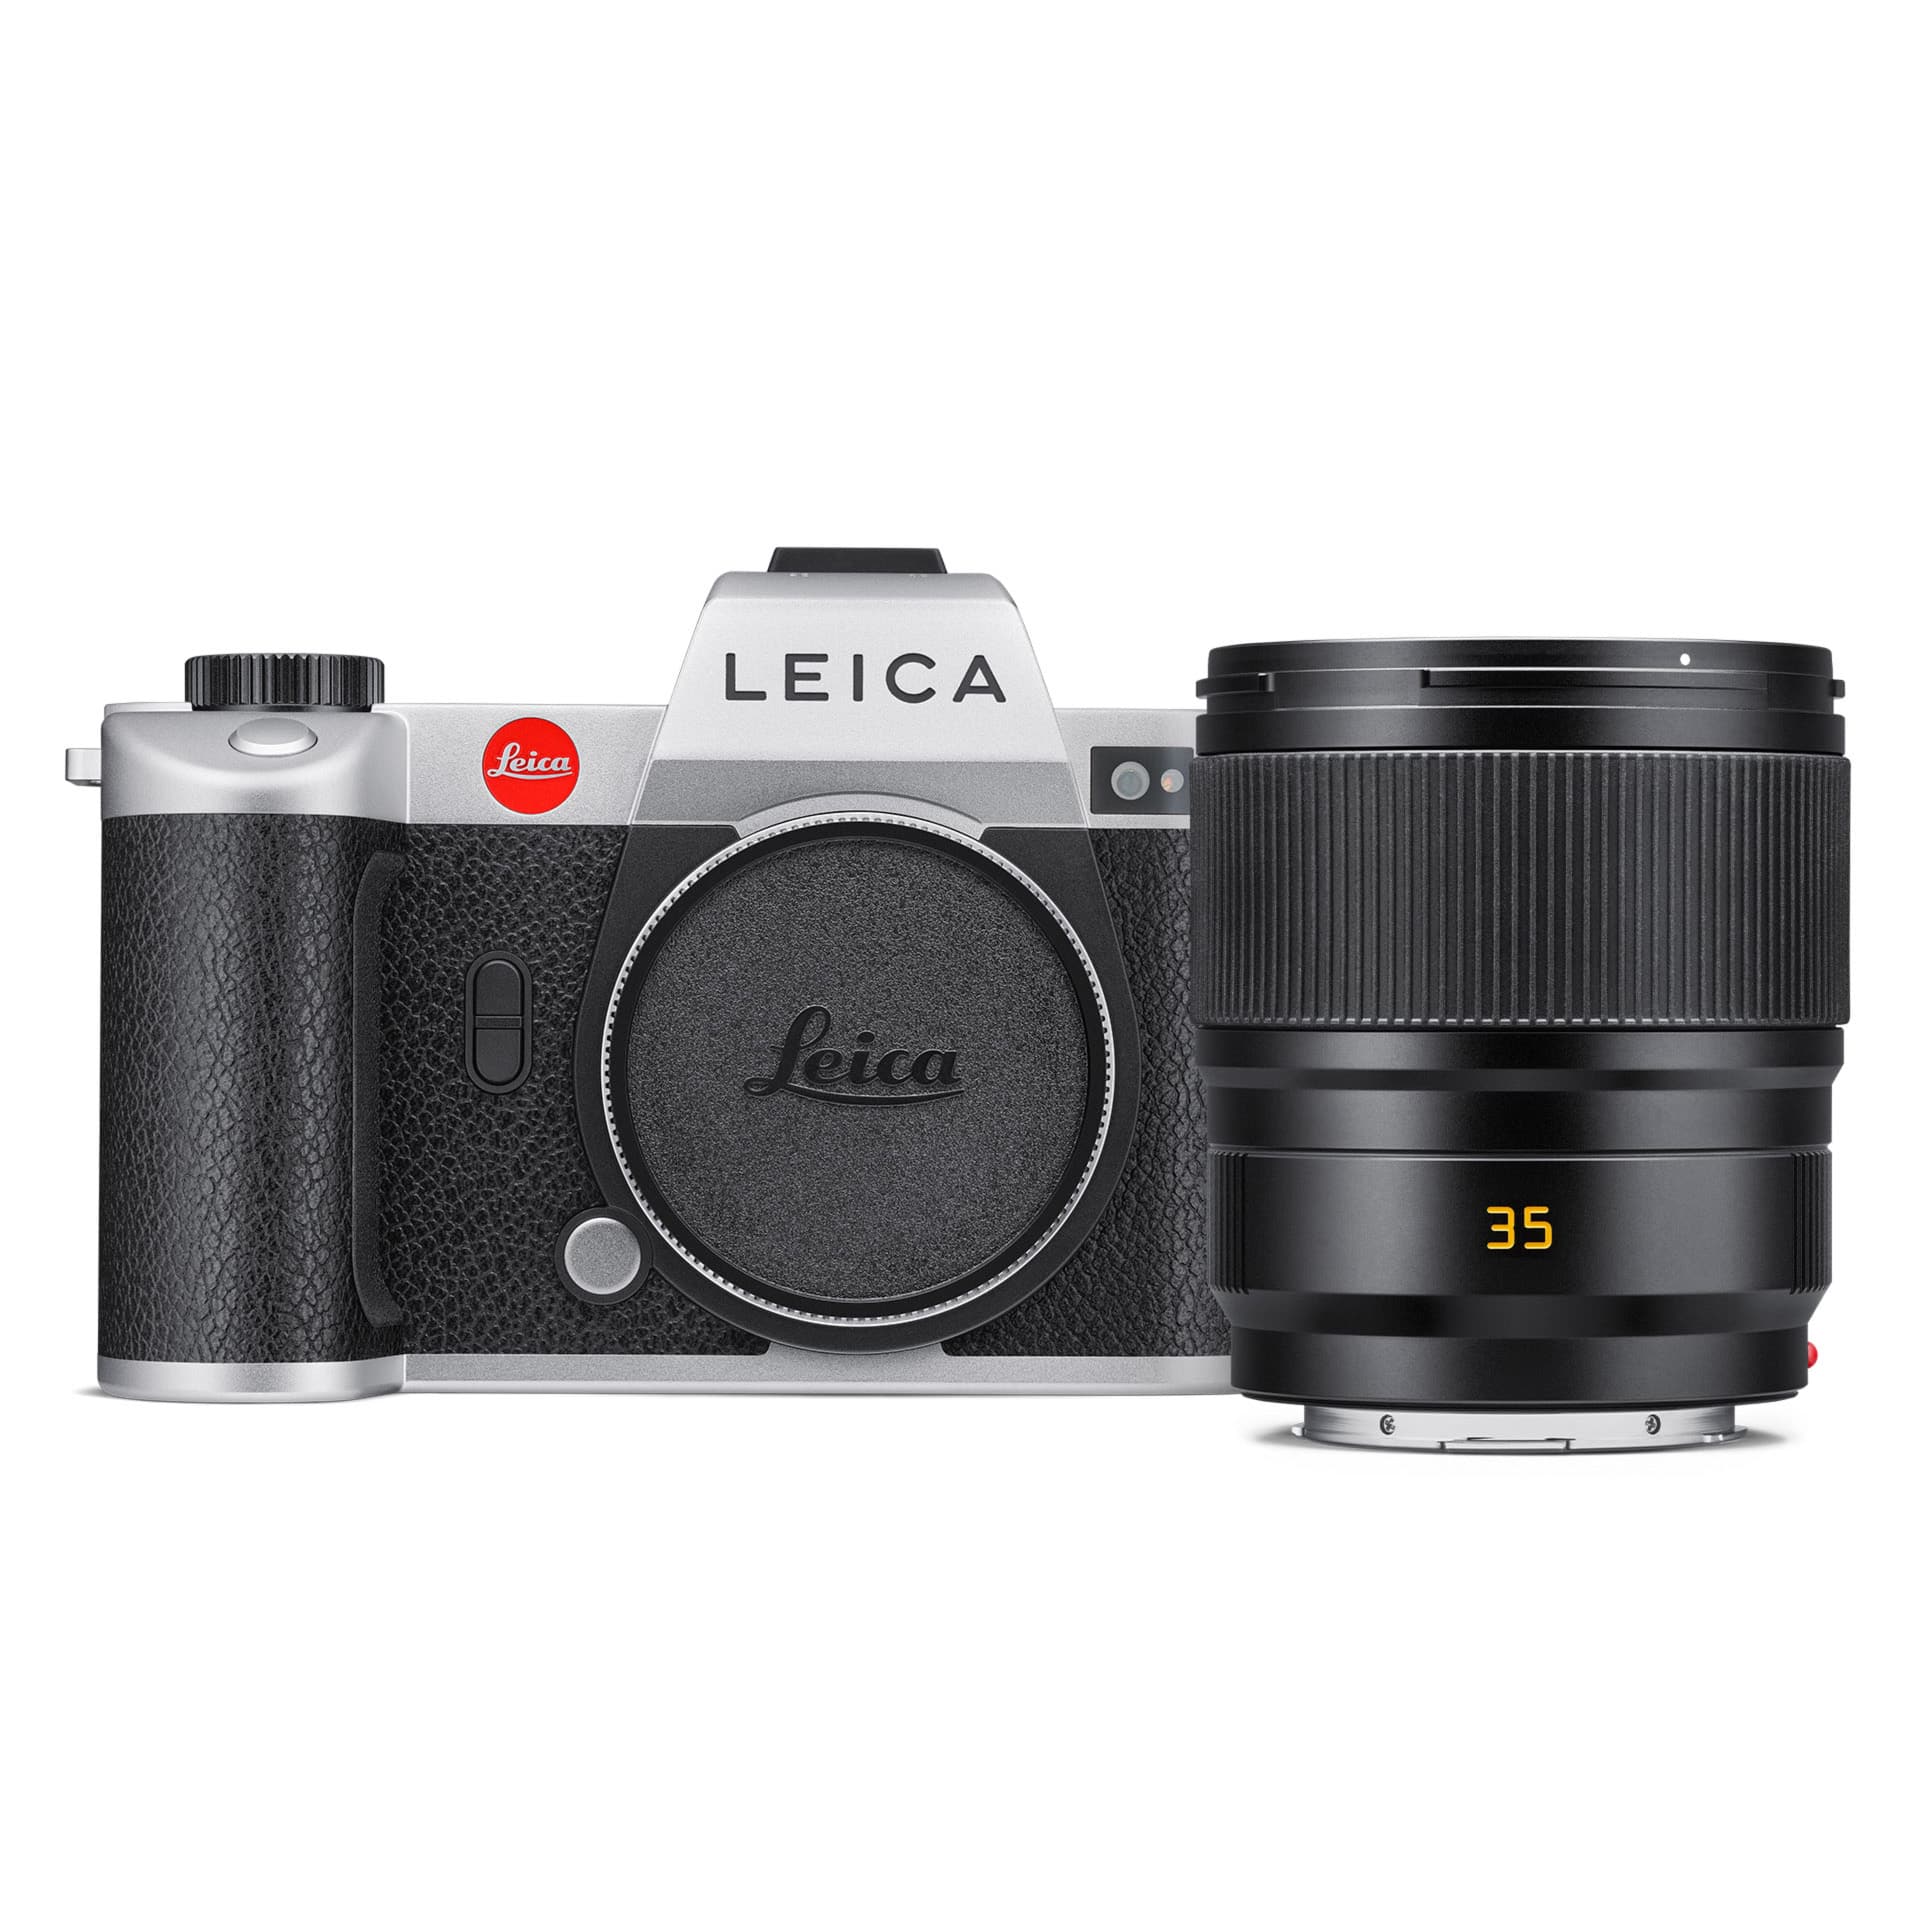 Leica】ライカSL2 シルバーレンズセット新登場 銀一オンラインショップ